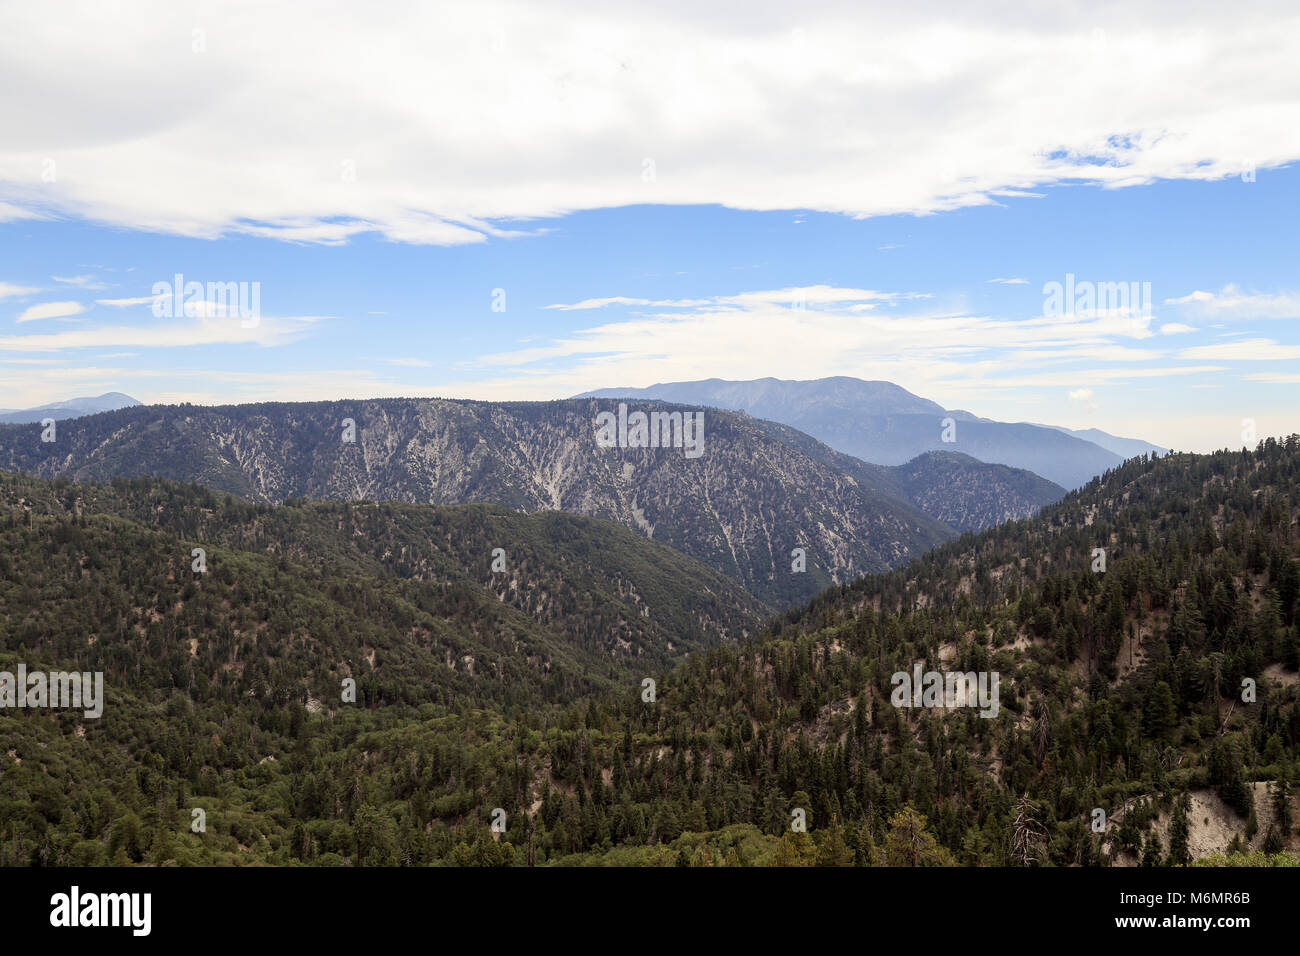 A vewi of San Bernarnino National Forest, Big Bear California Stock Photo